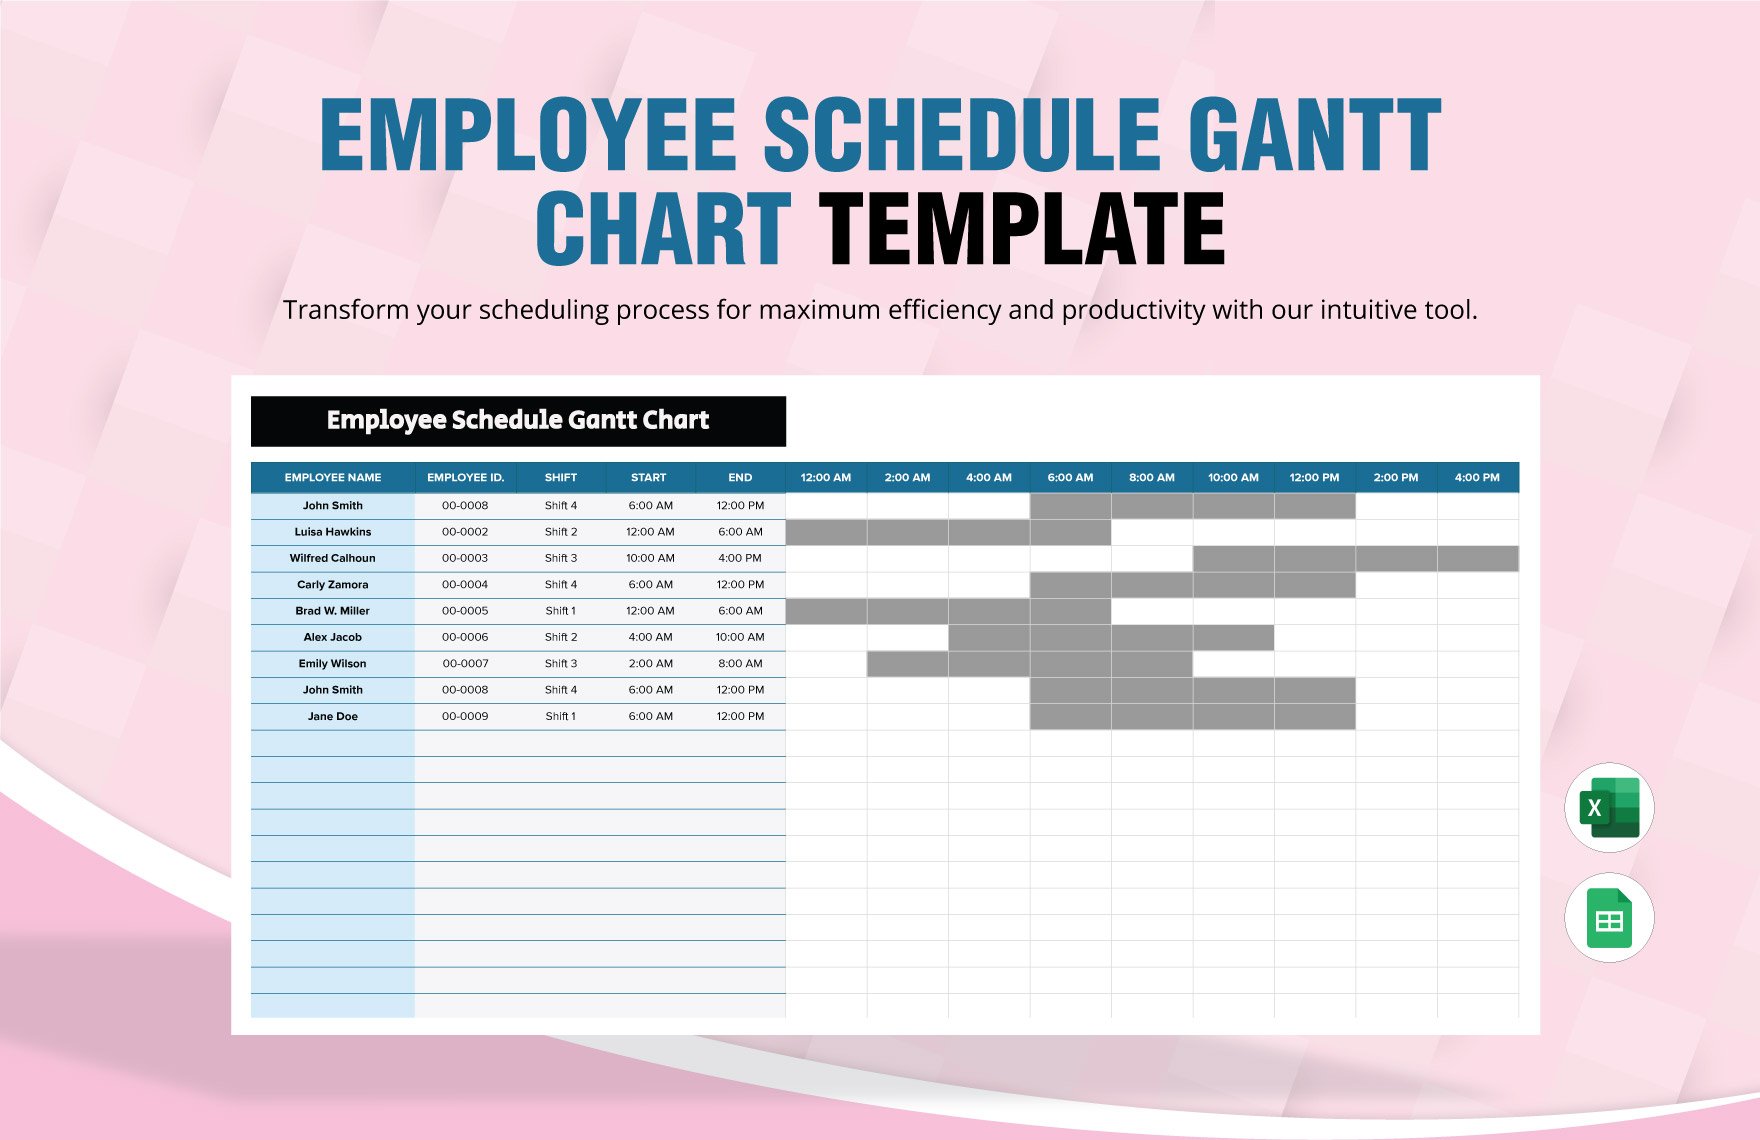 Employee Schedule Gantt Chart Template in Excel, Google Sheets